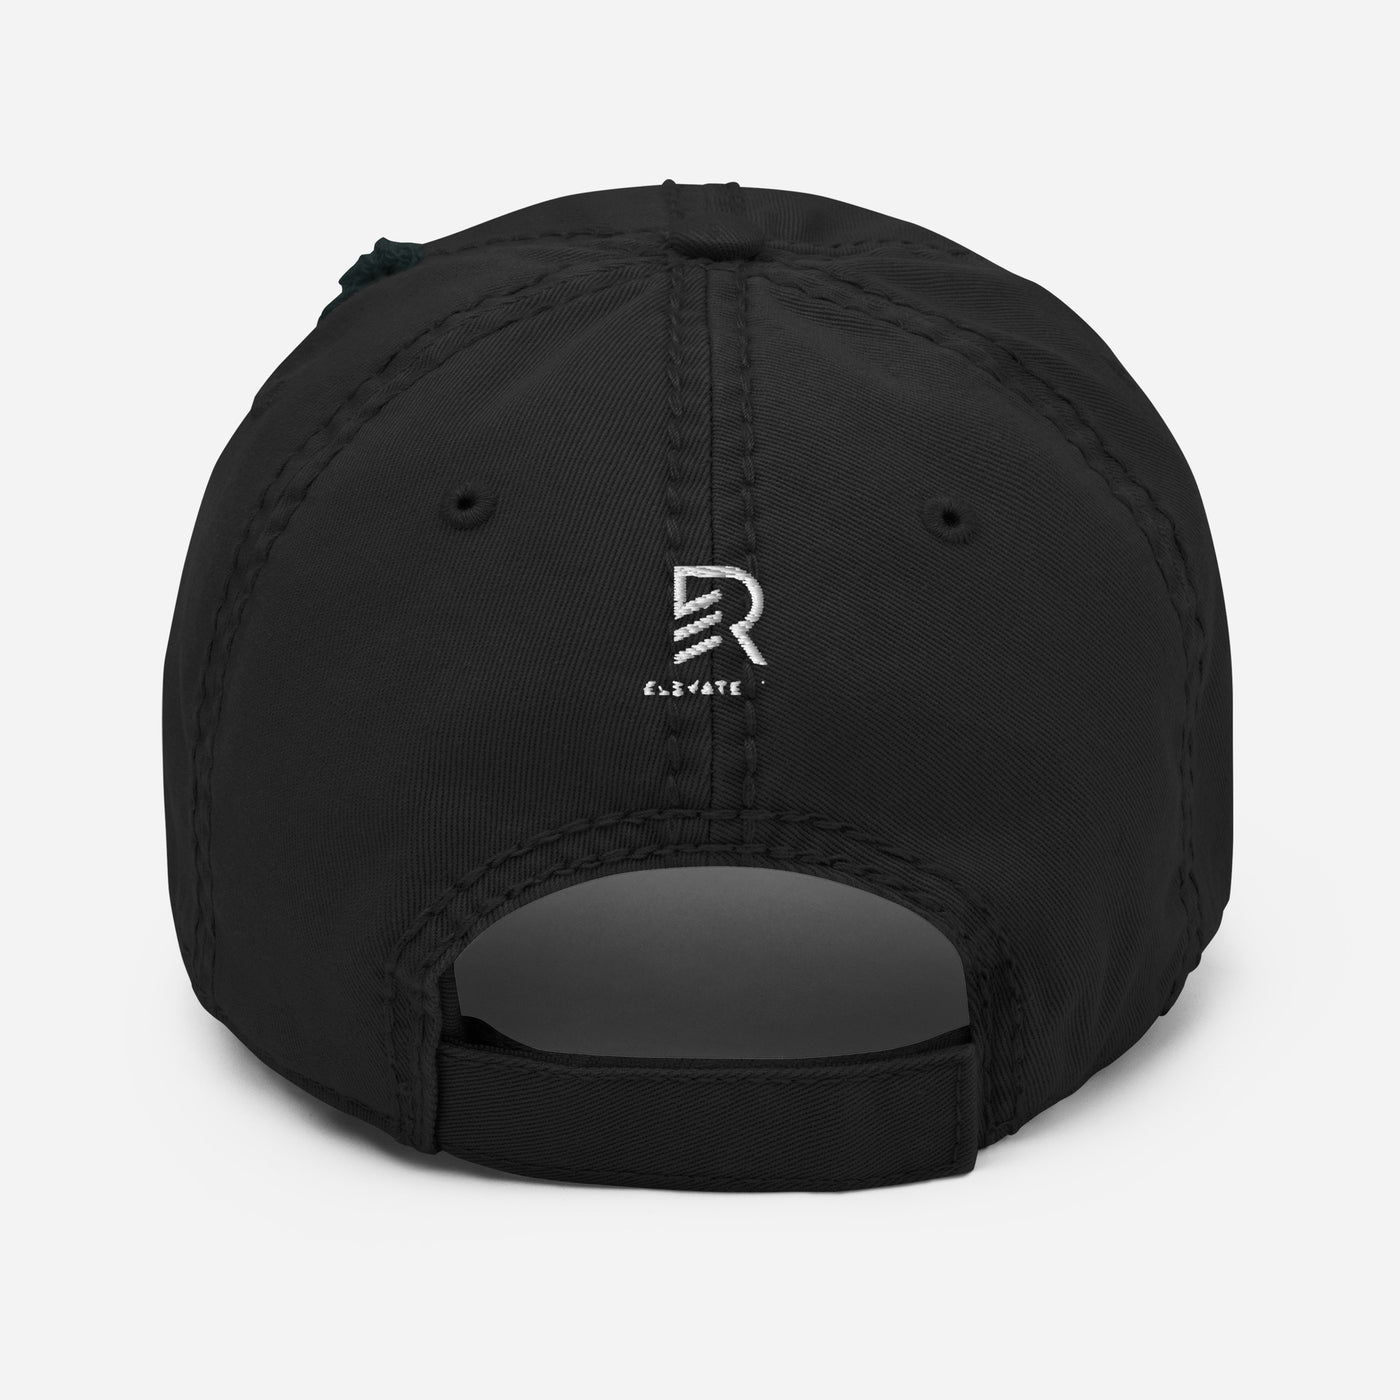 Distressed Black Dad Hat - Unlimited Focused